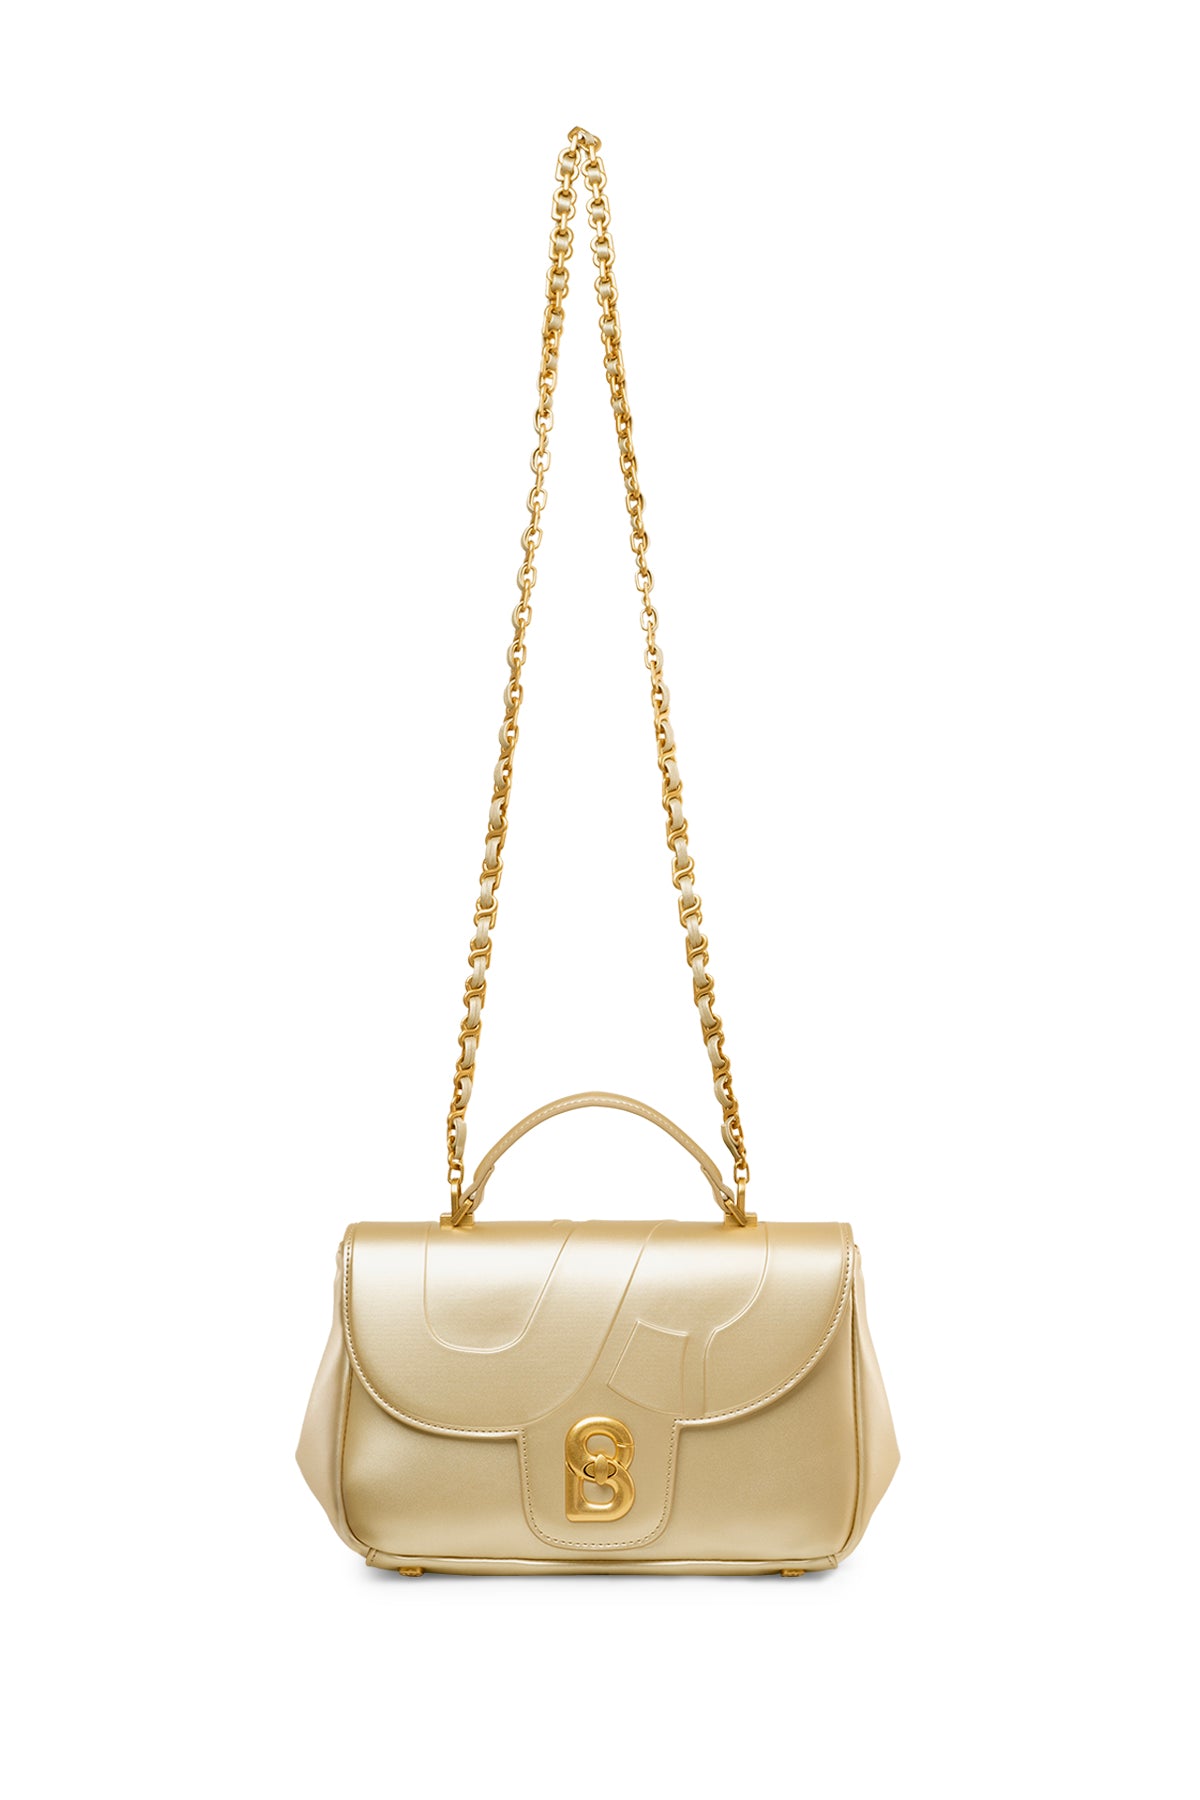 Alma Flap Bag Smooth Finish Medium - Gold